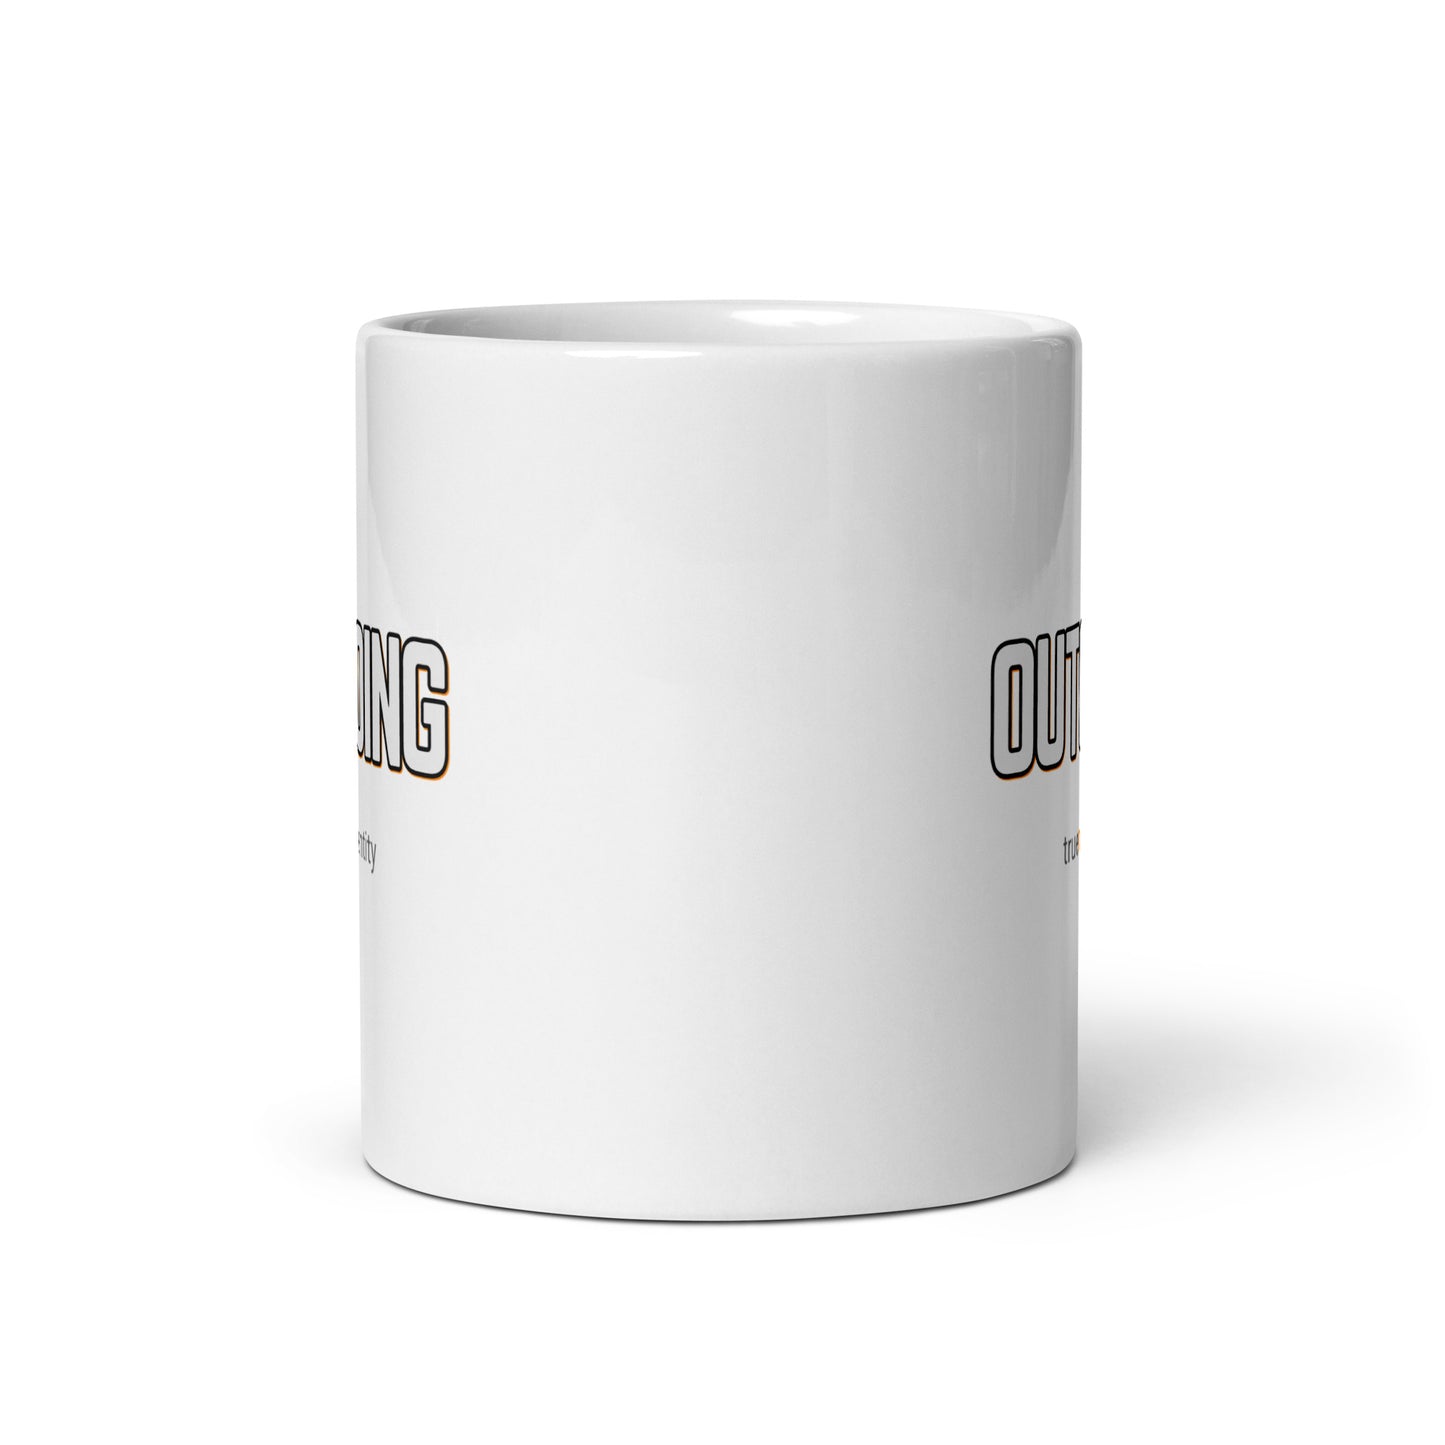 OUTGOING White Coffee Mug Bold 11 oz or 15 oz